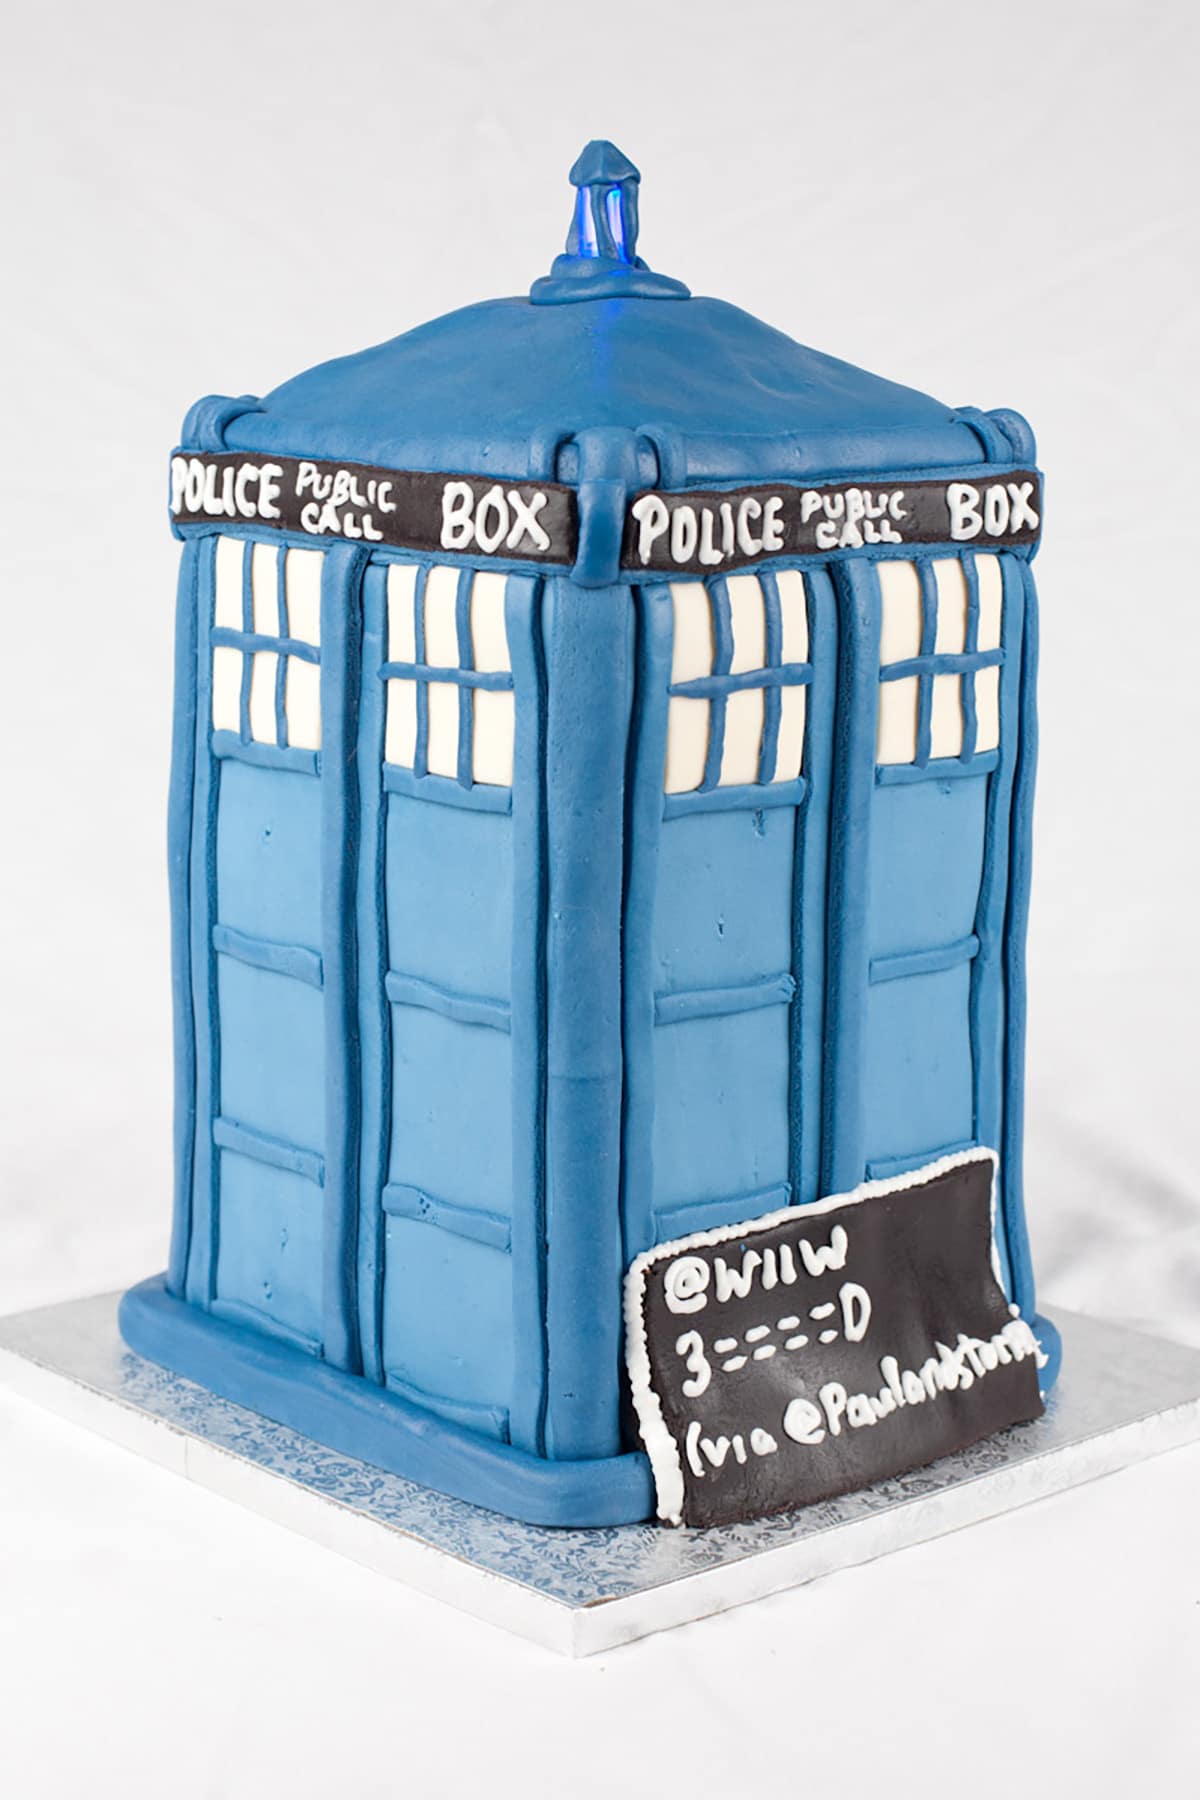 The TARDIS cake, with the top light lit.